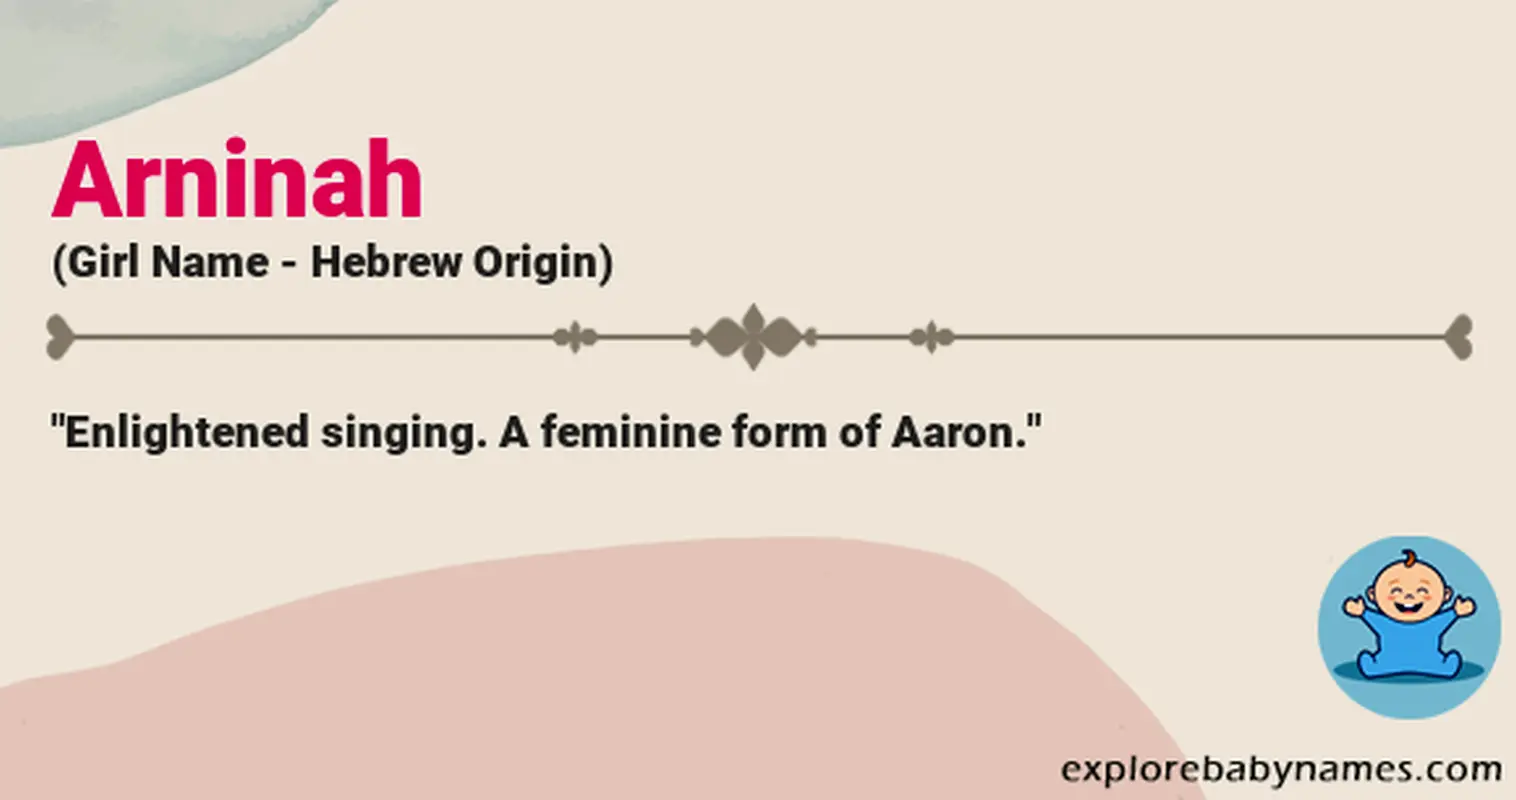 Meaning of Arninah